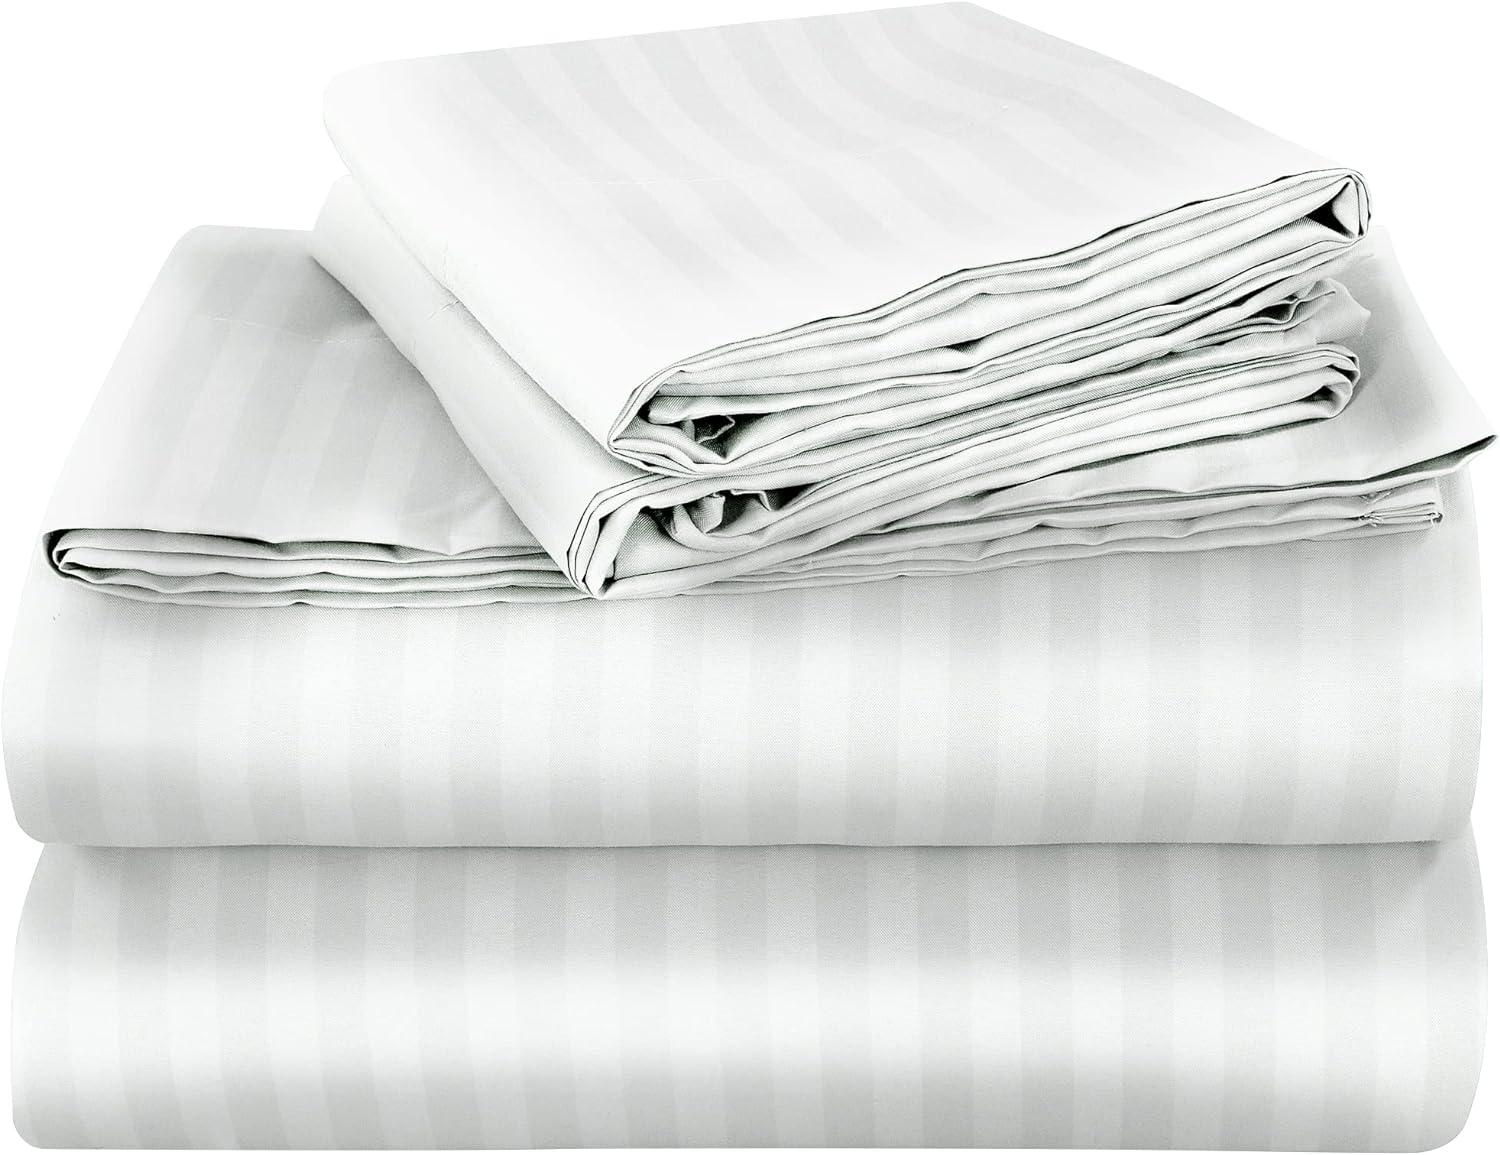 ROYALE LINENS Striped Bed Sheet Set - Brushed Microfiber 1800 Bedding - 1 Fitted Sheet, 1 Flat Sheet, 2 Pillow Cases - Wrinkle & Fade Resistant - 4 Piece Damask Stripe King Bed Sheet Set (King, White)